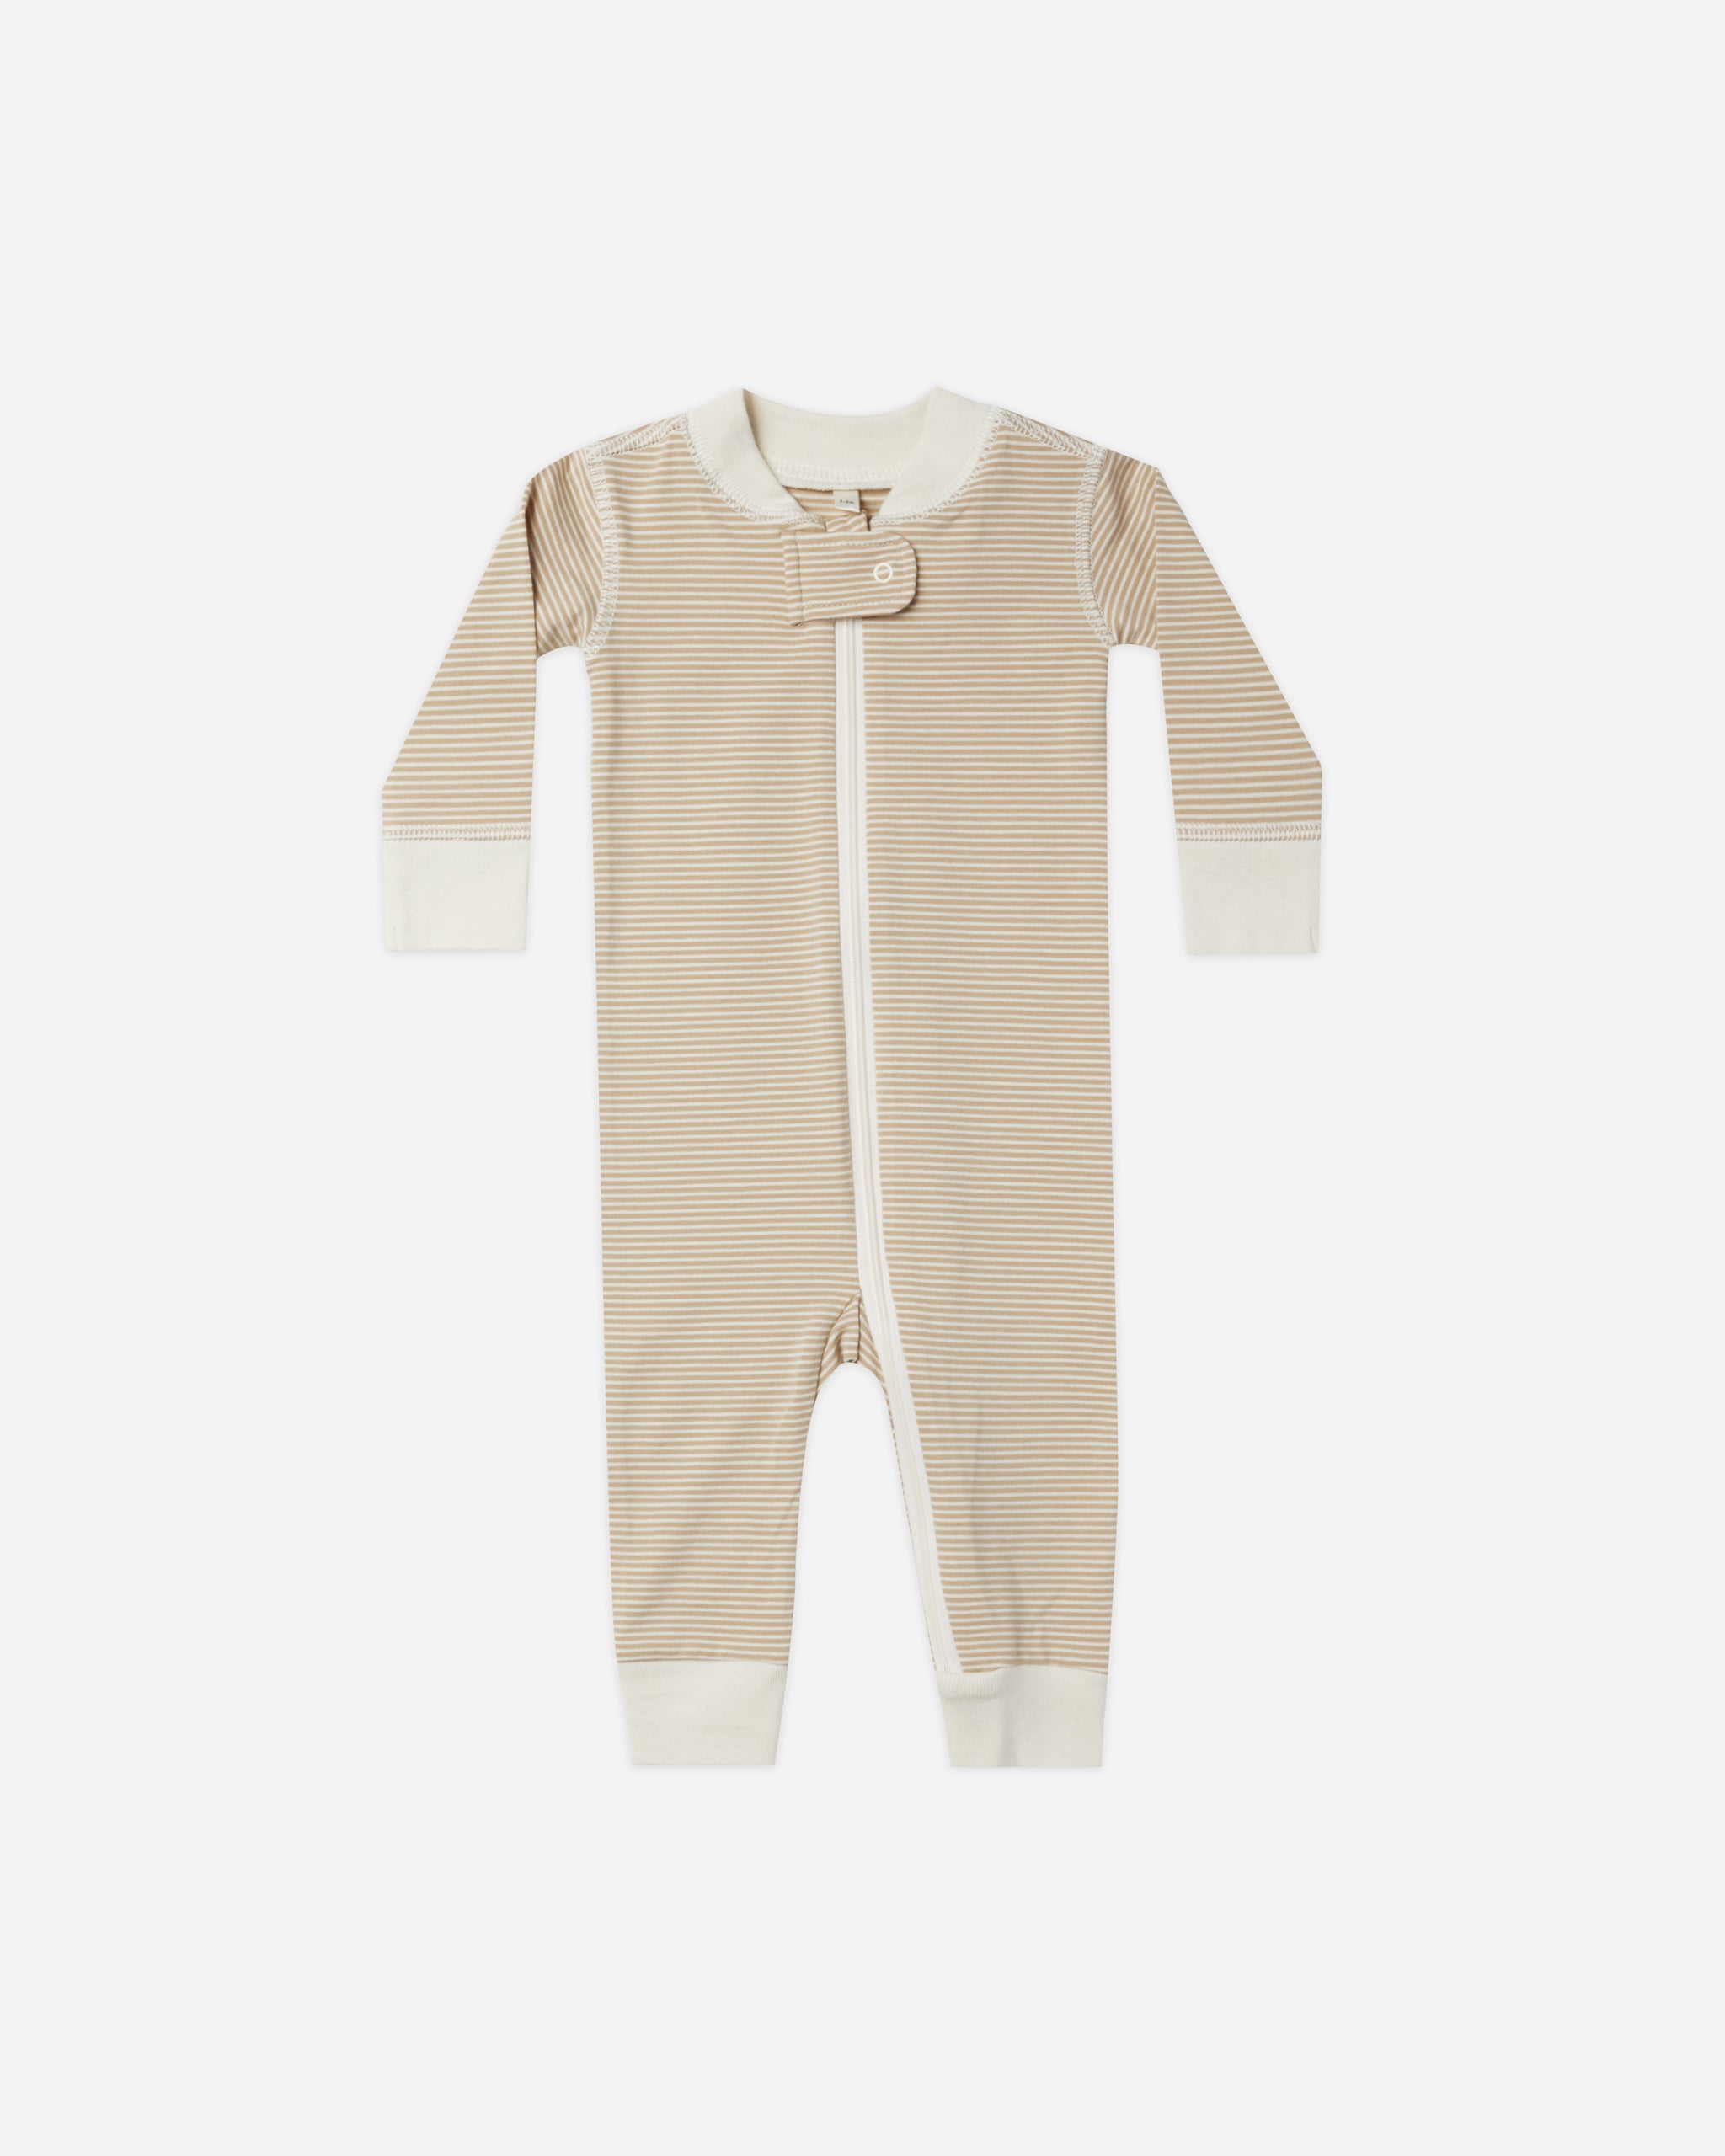 Zip Longsleeve Sleeper || Latte Micro Stripe - Rylee + Cru | Kids Clothes | Trendy Baby Clothes | Modern Infant Outfits |